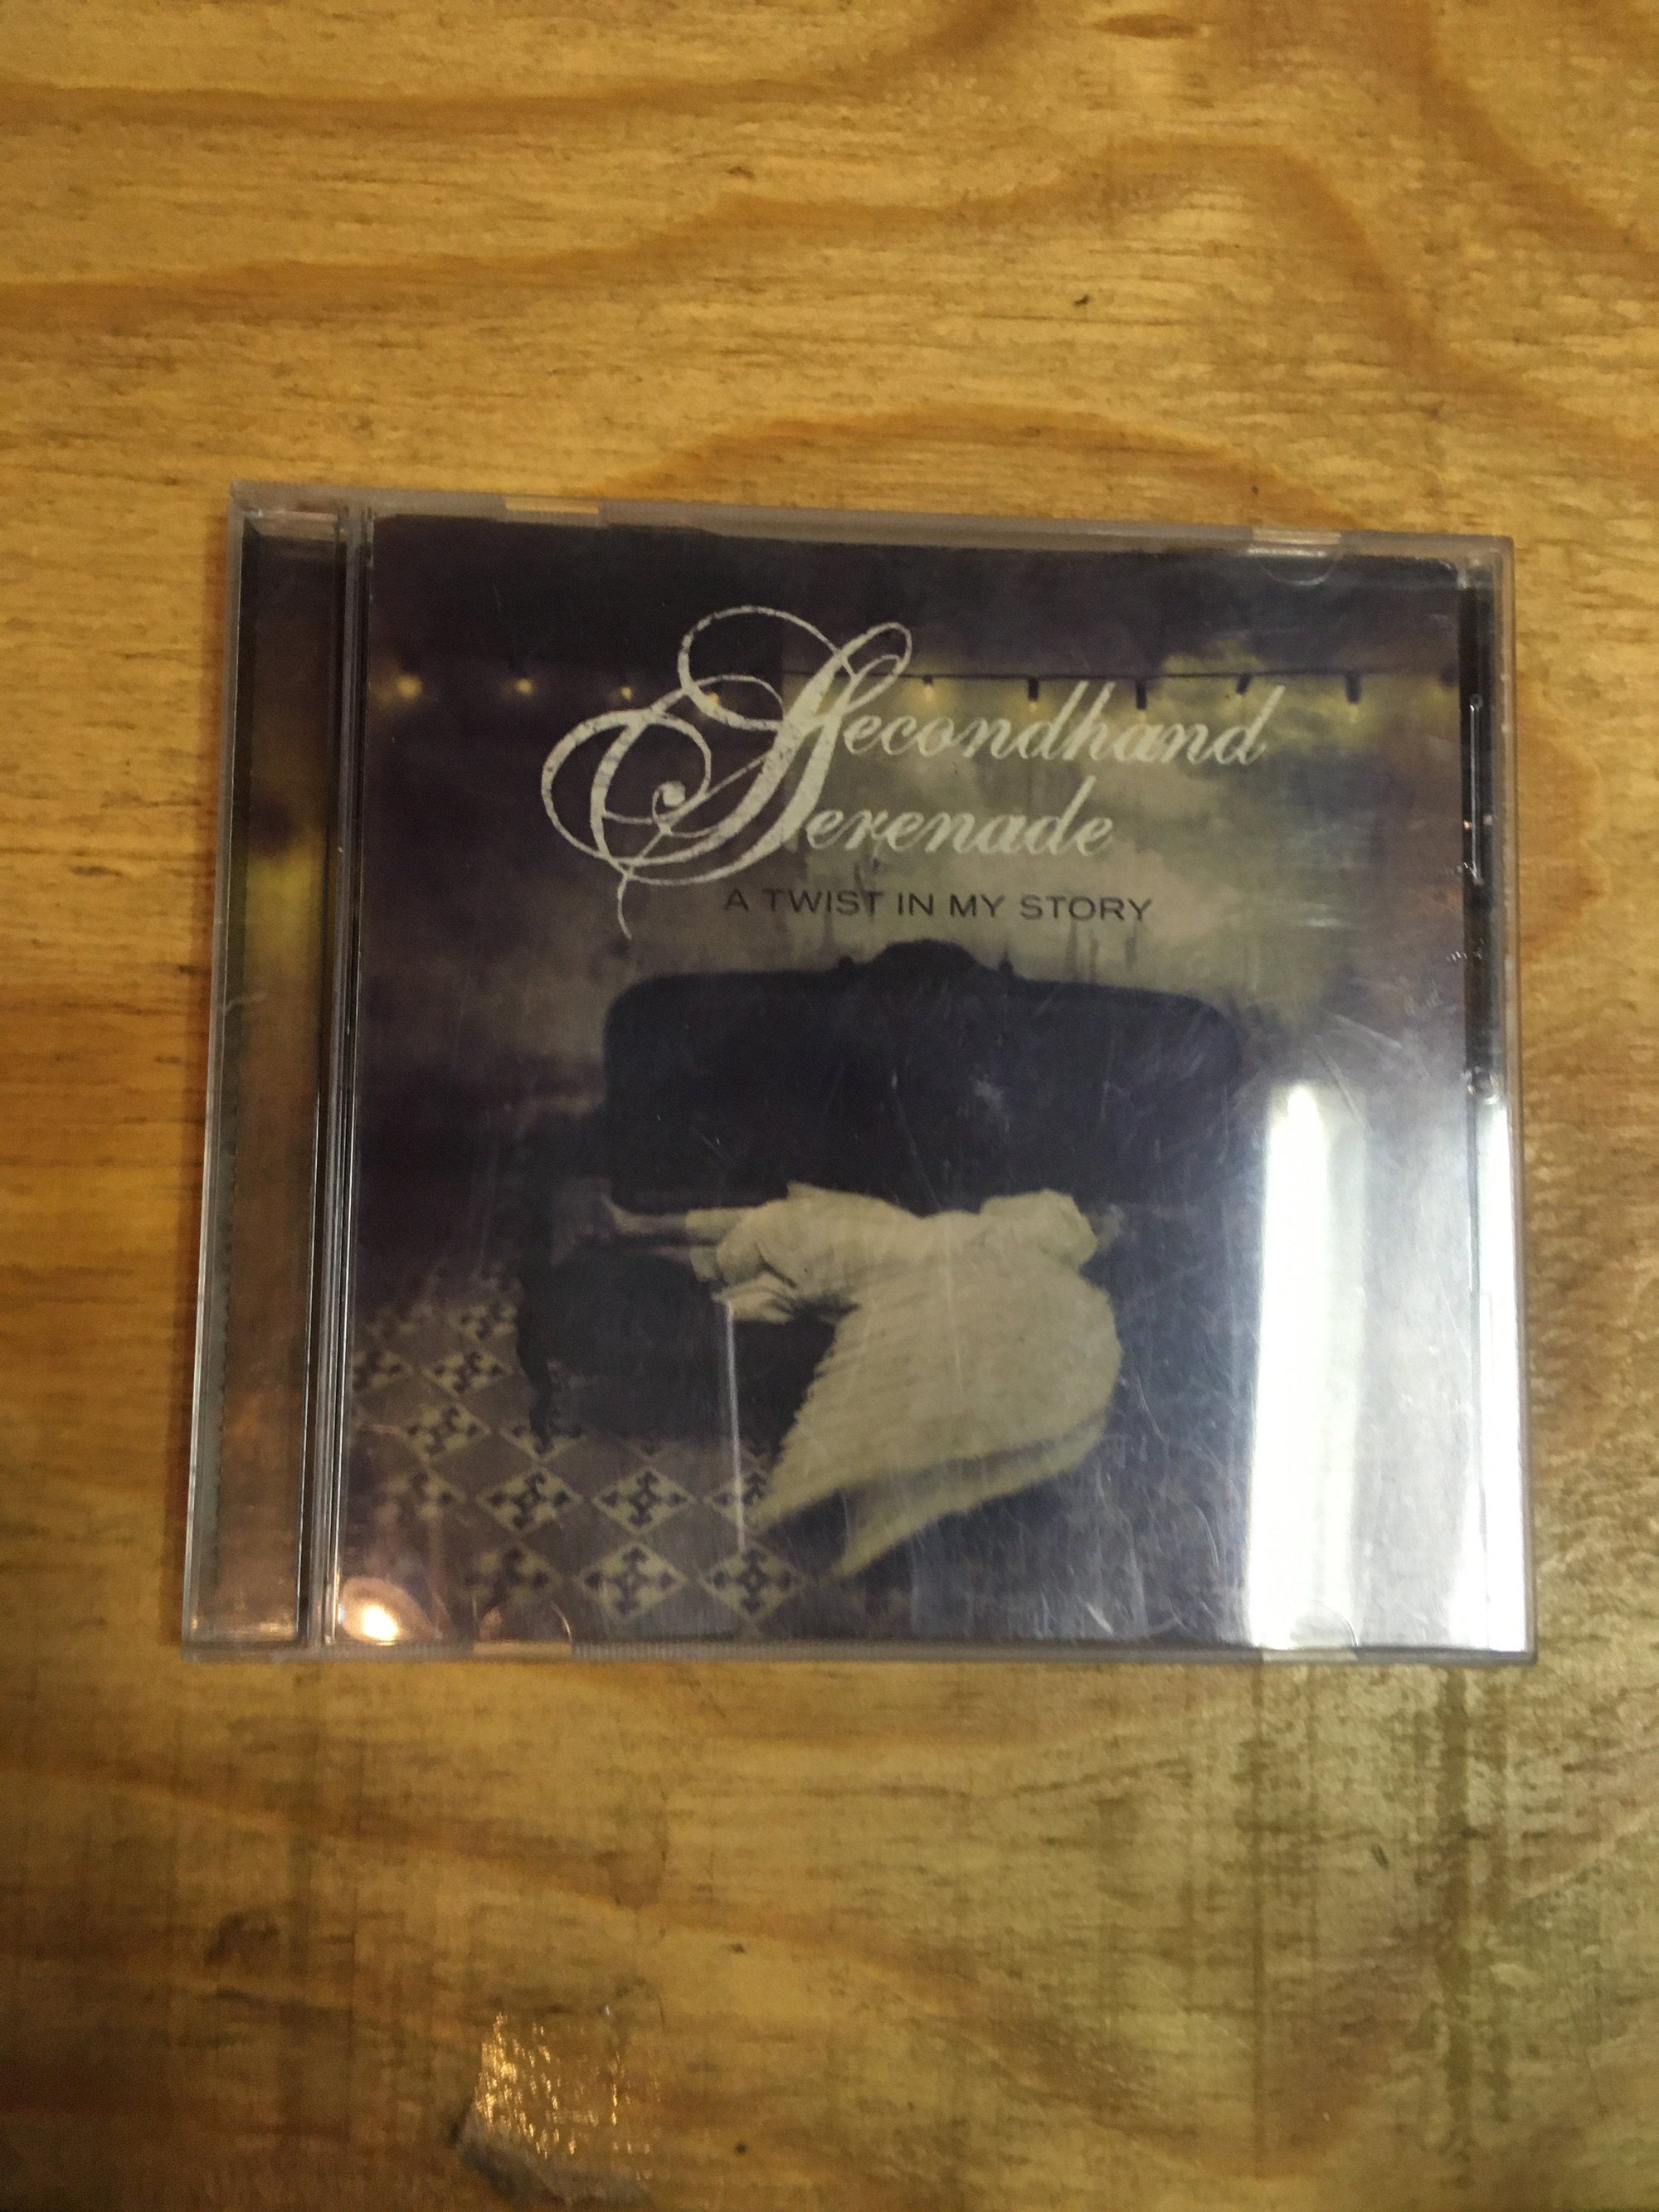 Secondhand Serenade - CD - 2ndhandwarehouse.com